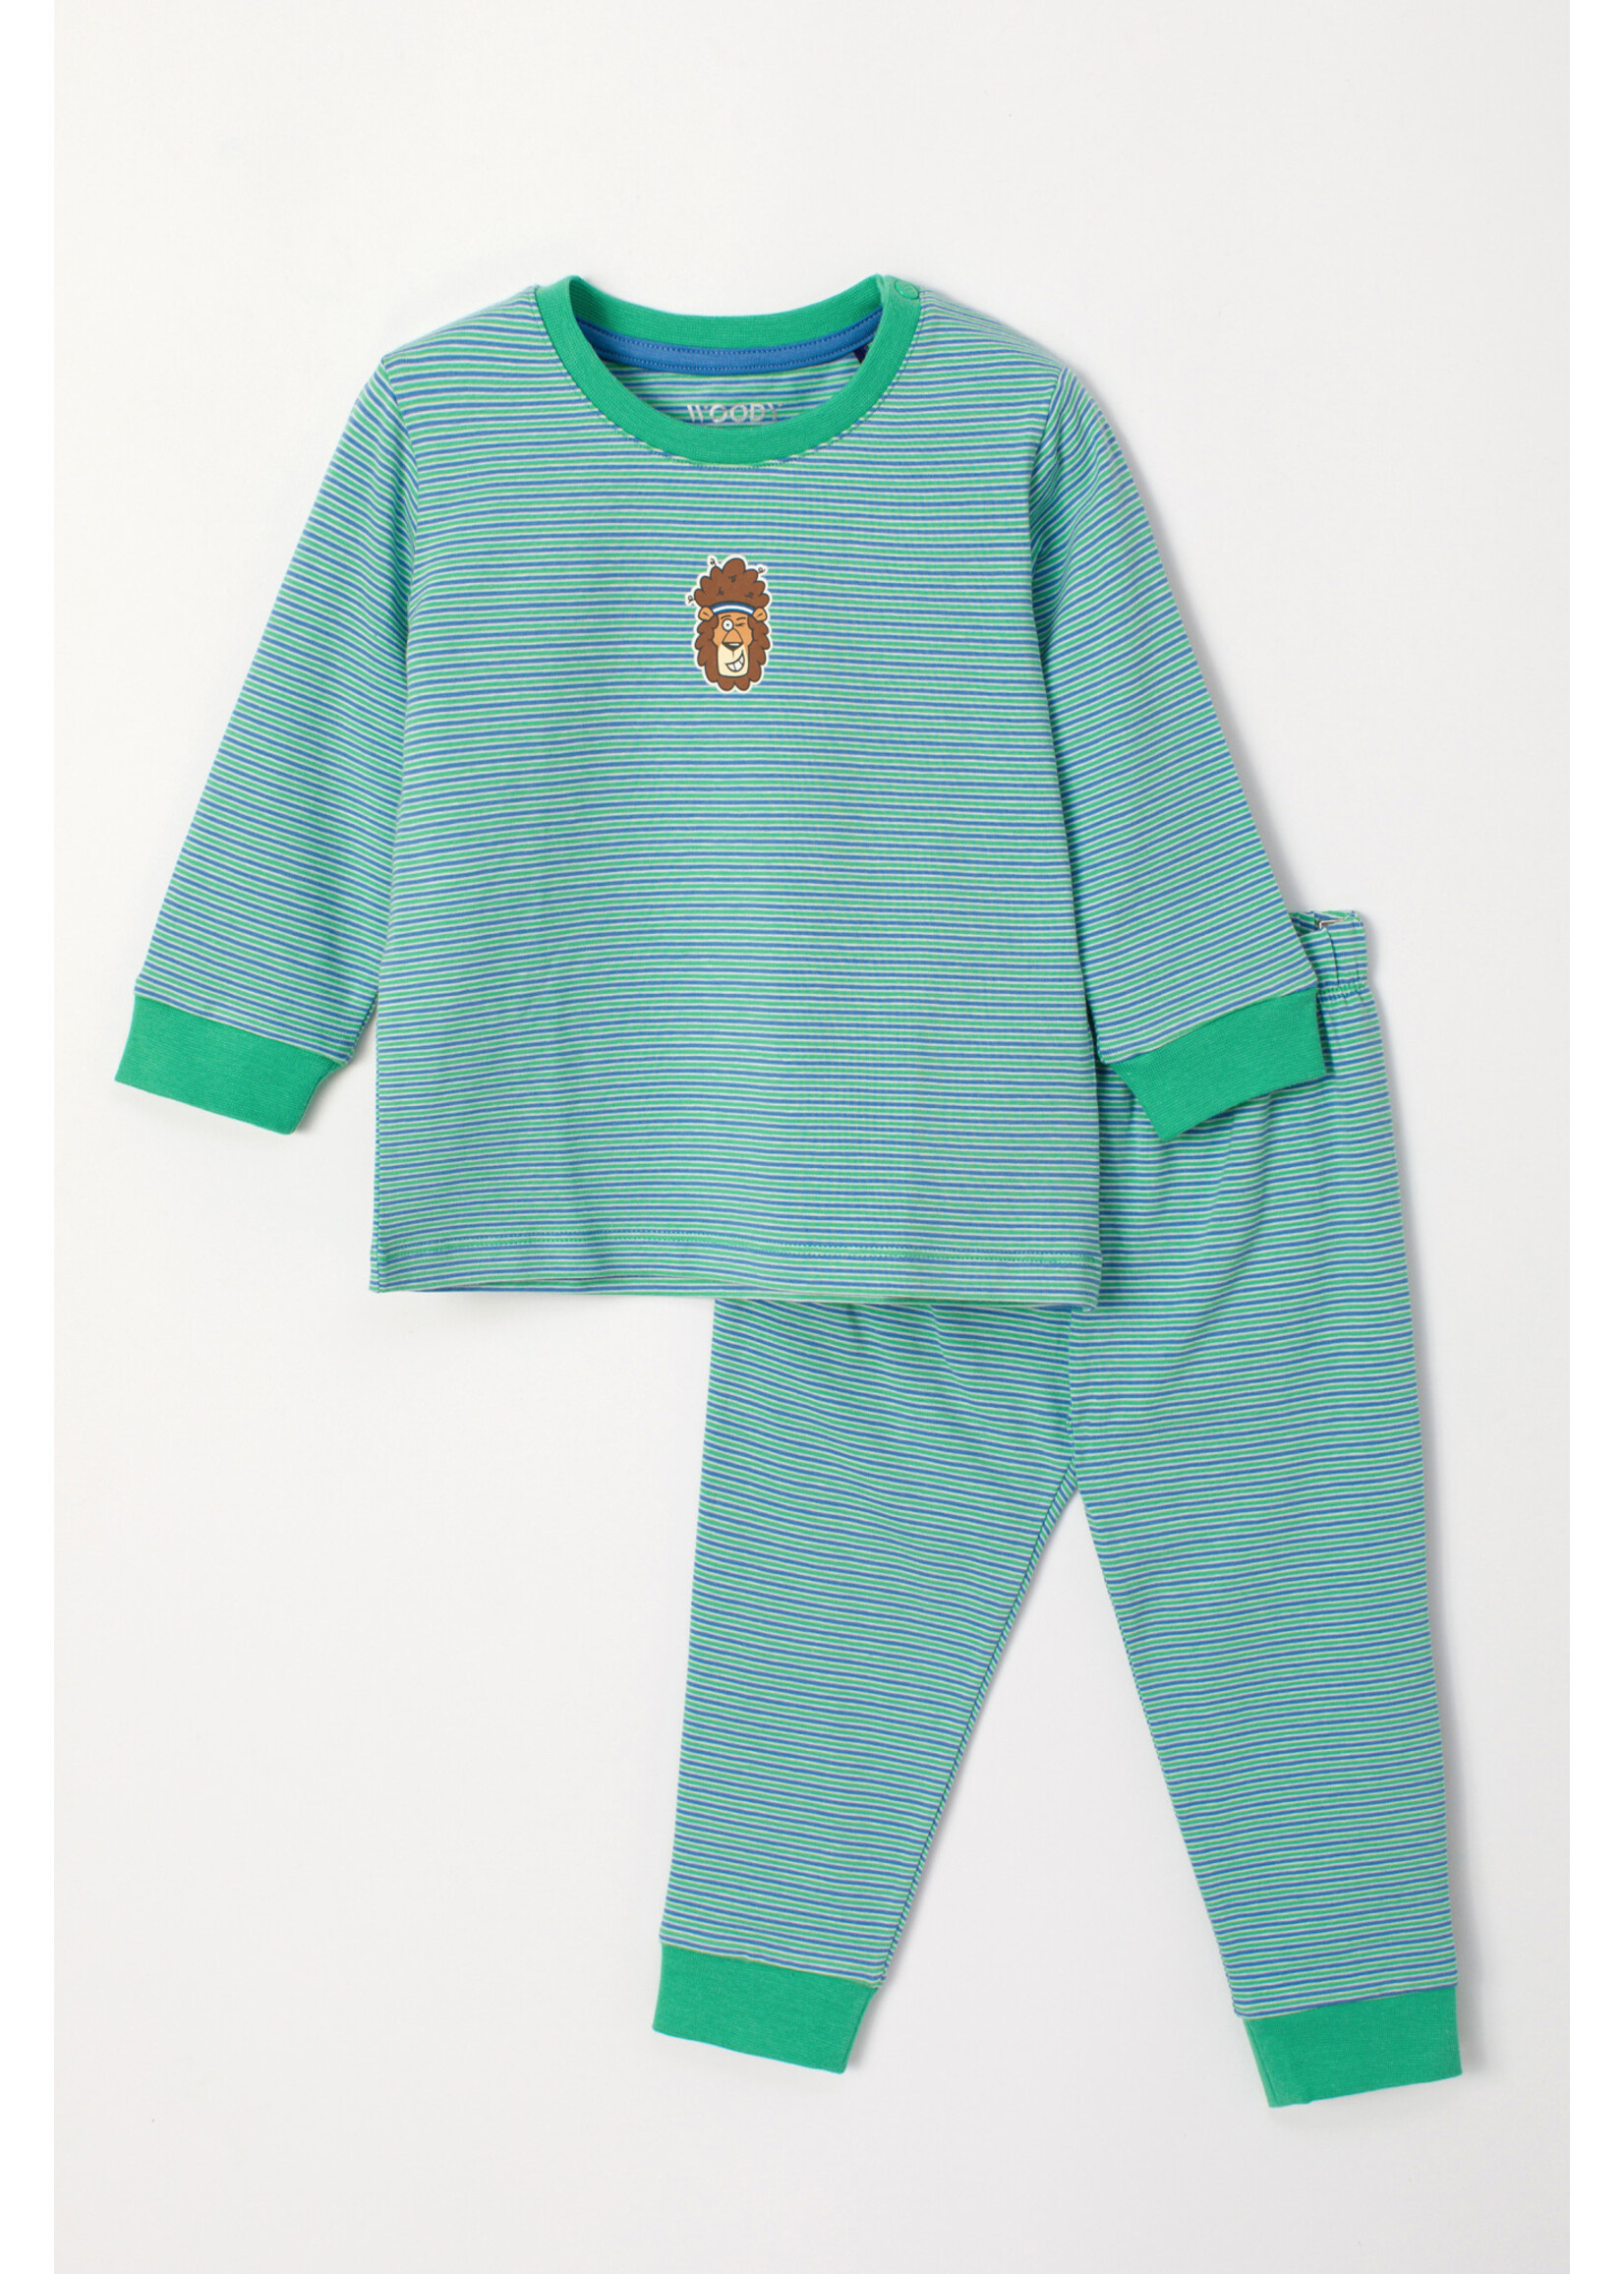 Woody Woody Unisex Pyjama Groen/Blauw streep Leeuw